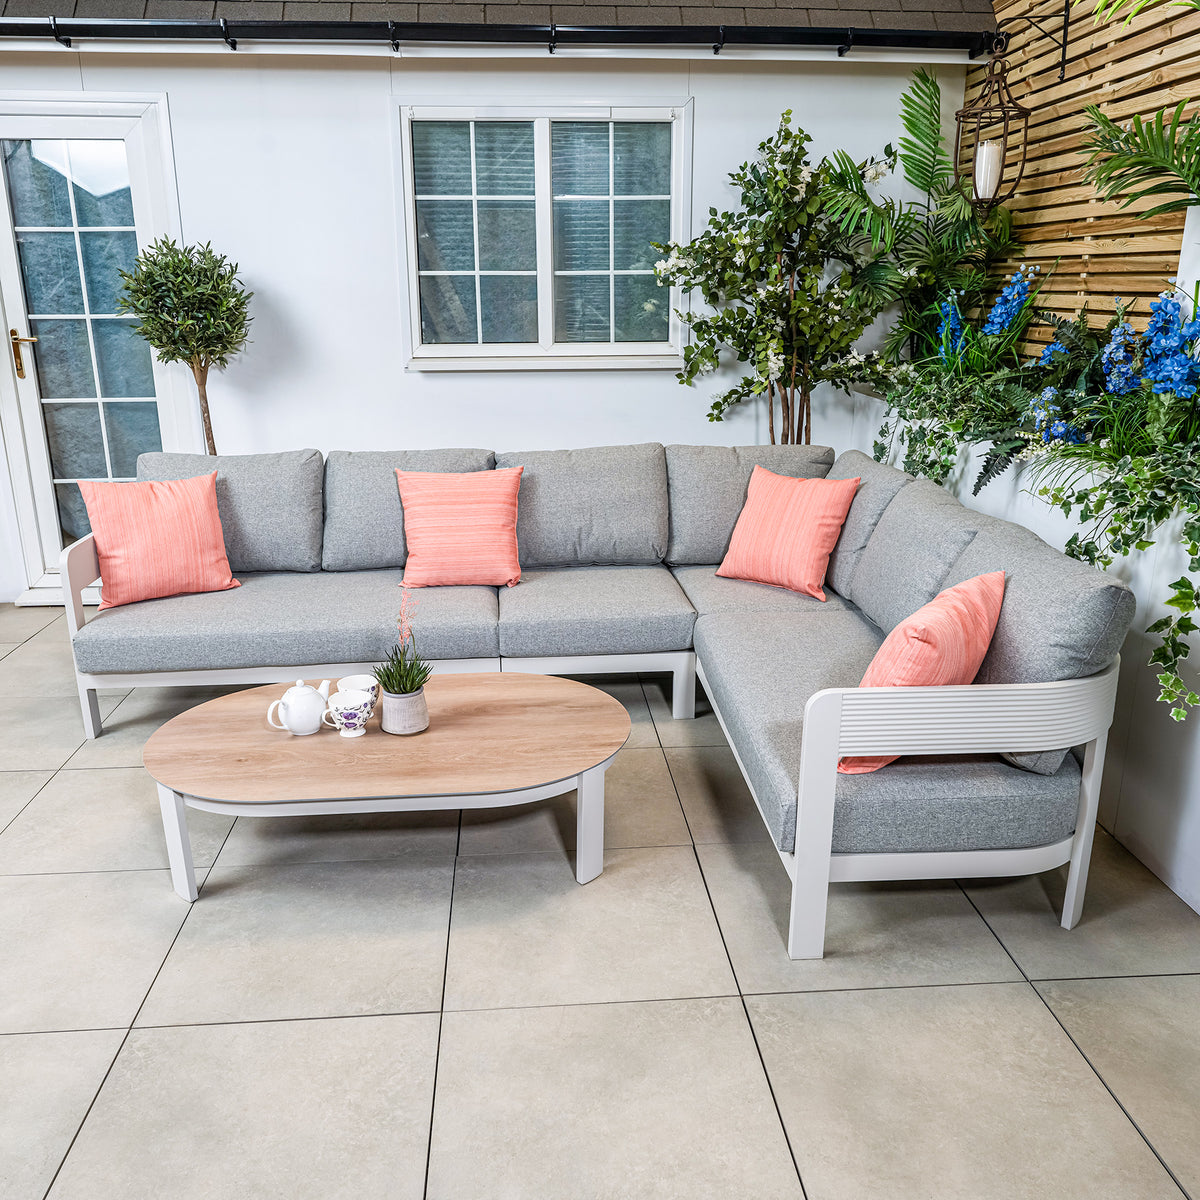 Bracken Outdoors Nevada Warm Grey Ripple Aluminium Rectangular Corner Sofa Set with Coffee Table